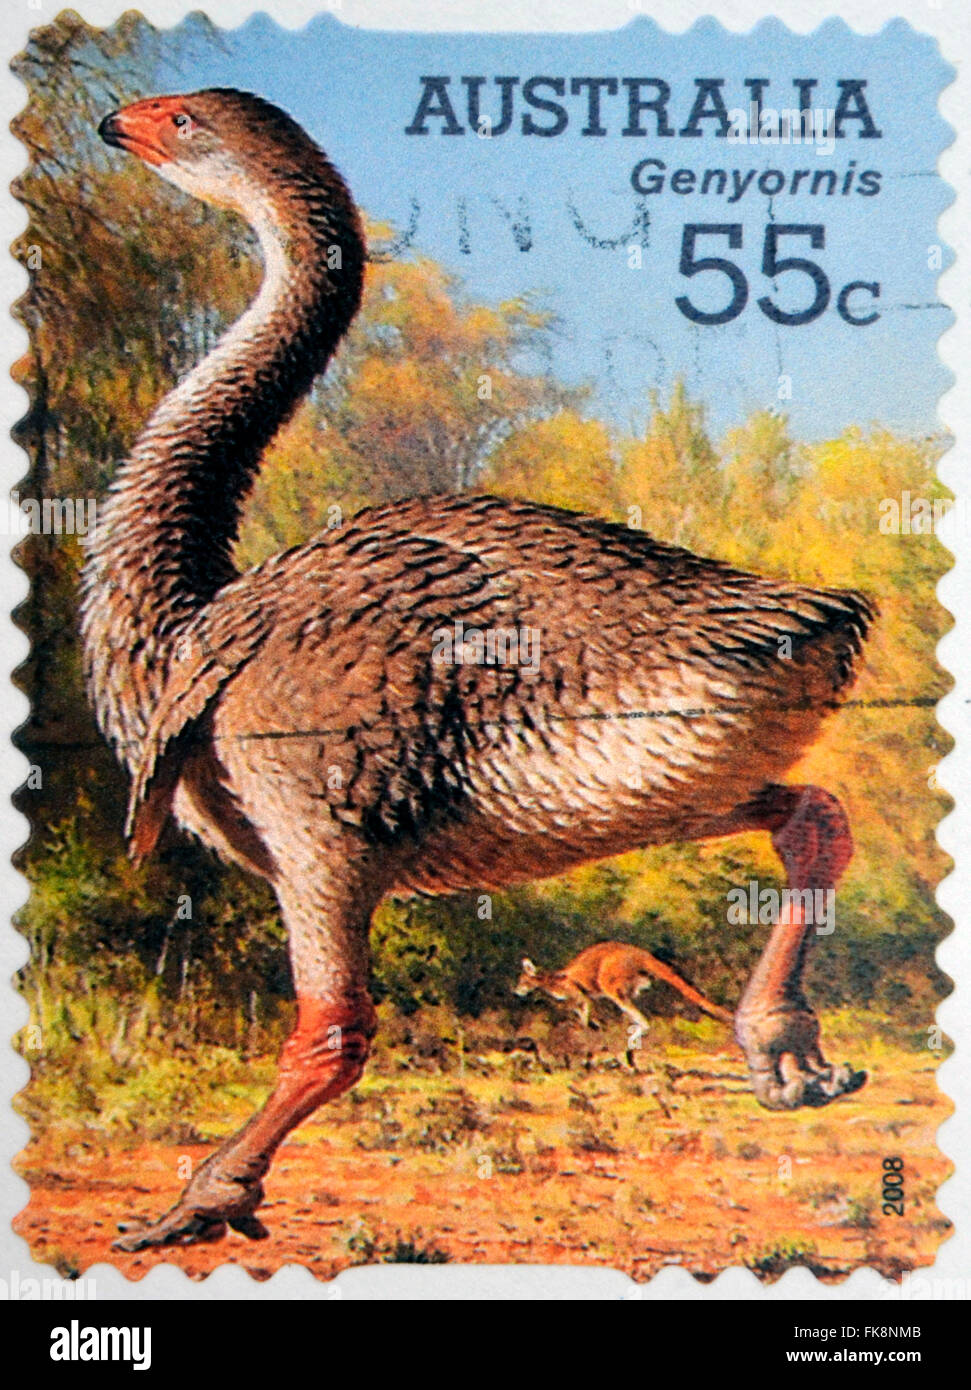 AUSTRALIA - CIRCA 2008: A stamp printed in Australia shows a Genyornis, circa 2008 Stock Photo